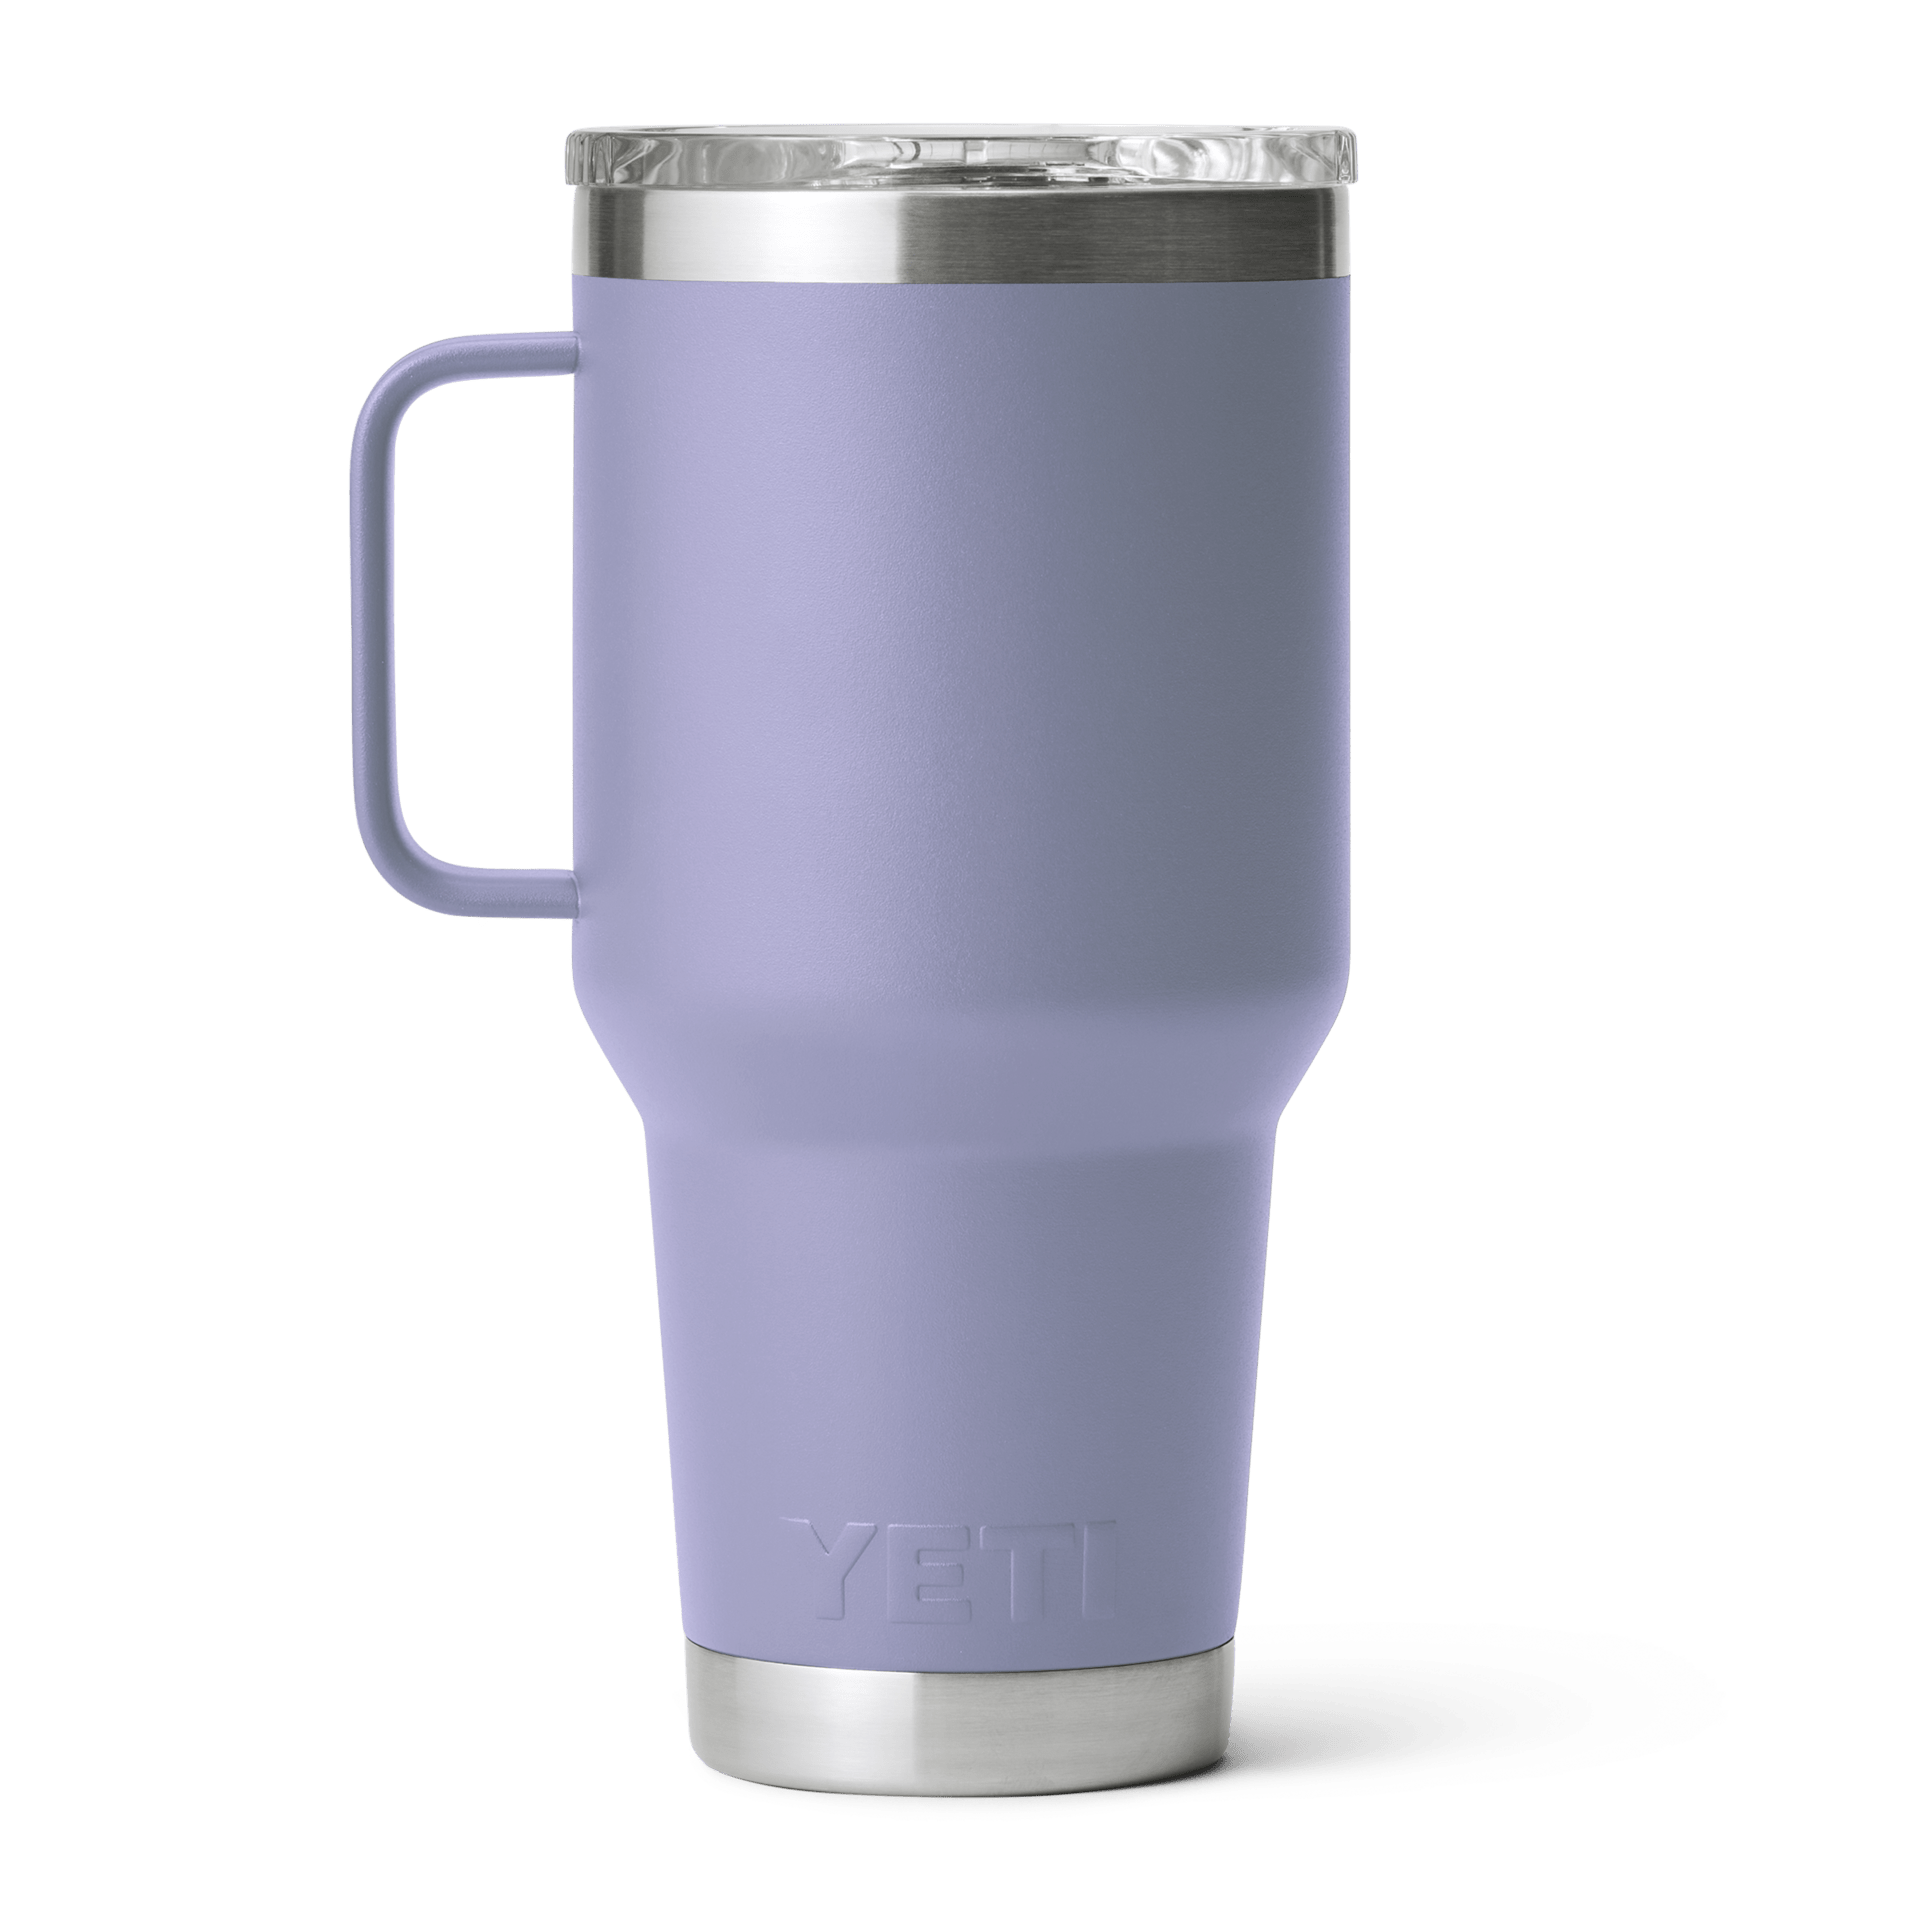 Yeti Rambler 30oz Travel Mug w/Stronghold Lid